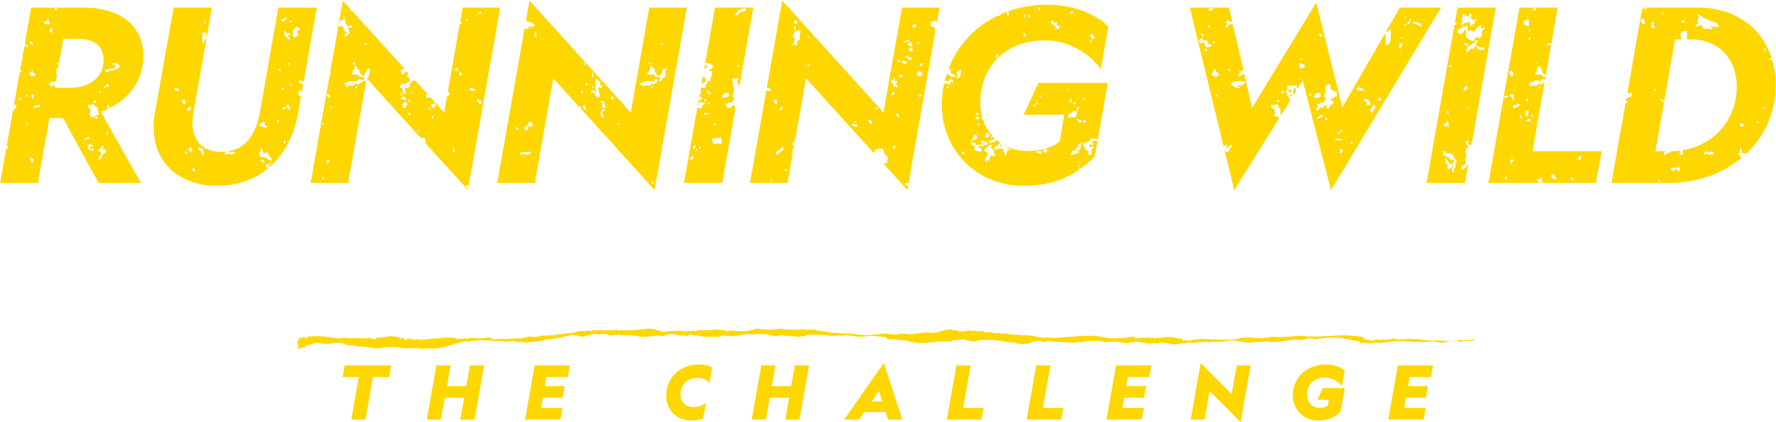 Running Wild with Bear Grylls: The Challenge logo